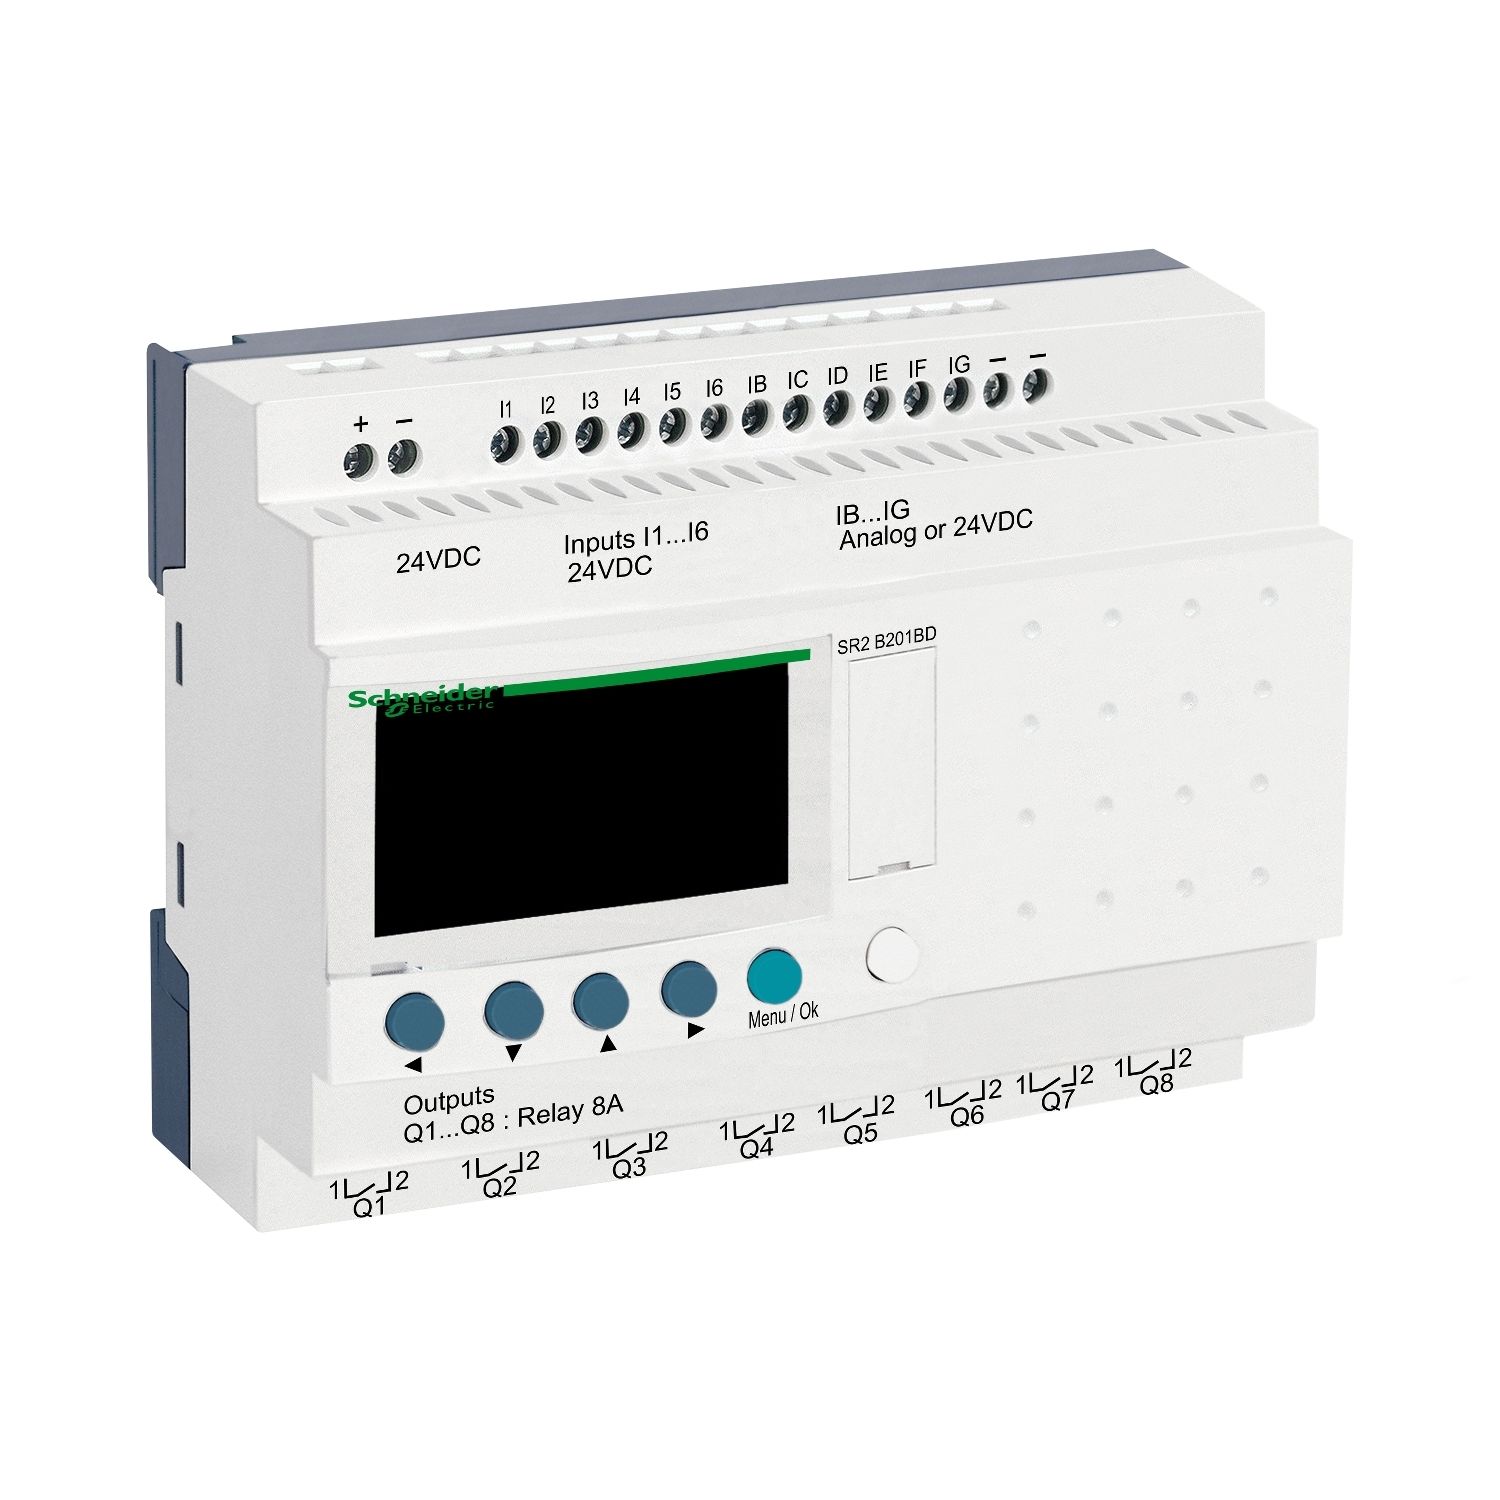 SR2B201BD compact smart relay, Zelio Logic SR2 SR3, 20 IO, 24V DC, clock, display, 8 relay outputs